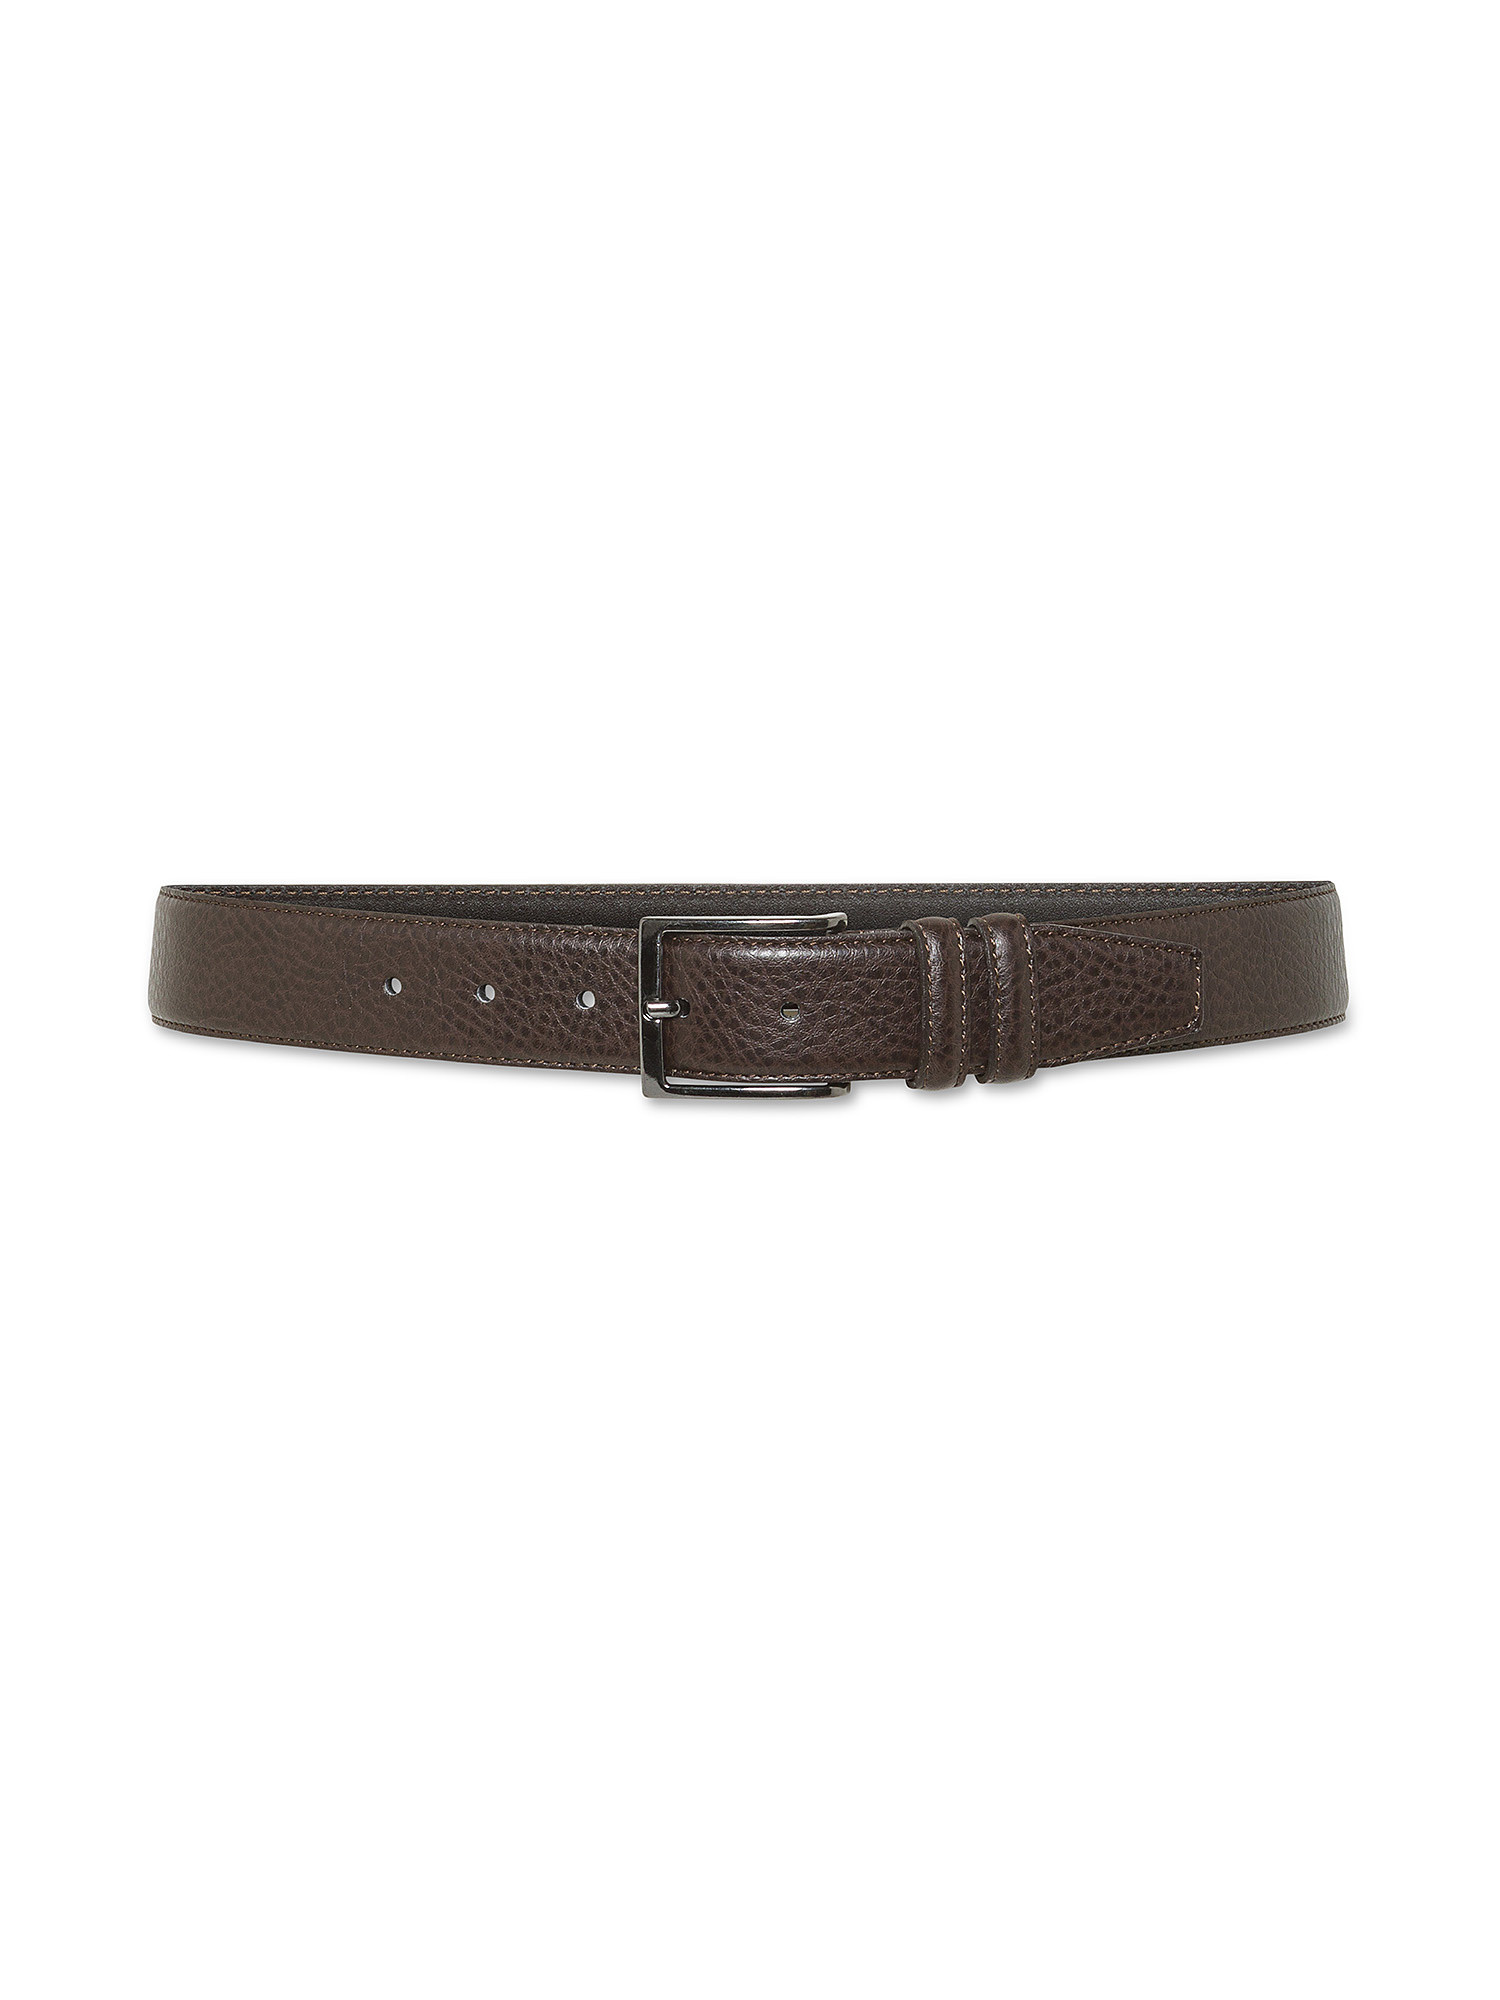 Luca D'Altieri - Leather belt, Dark Brown, large image number 1